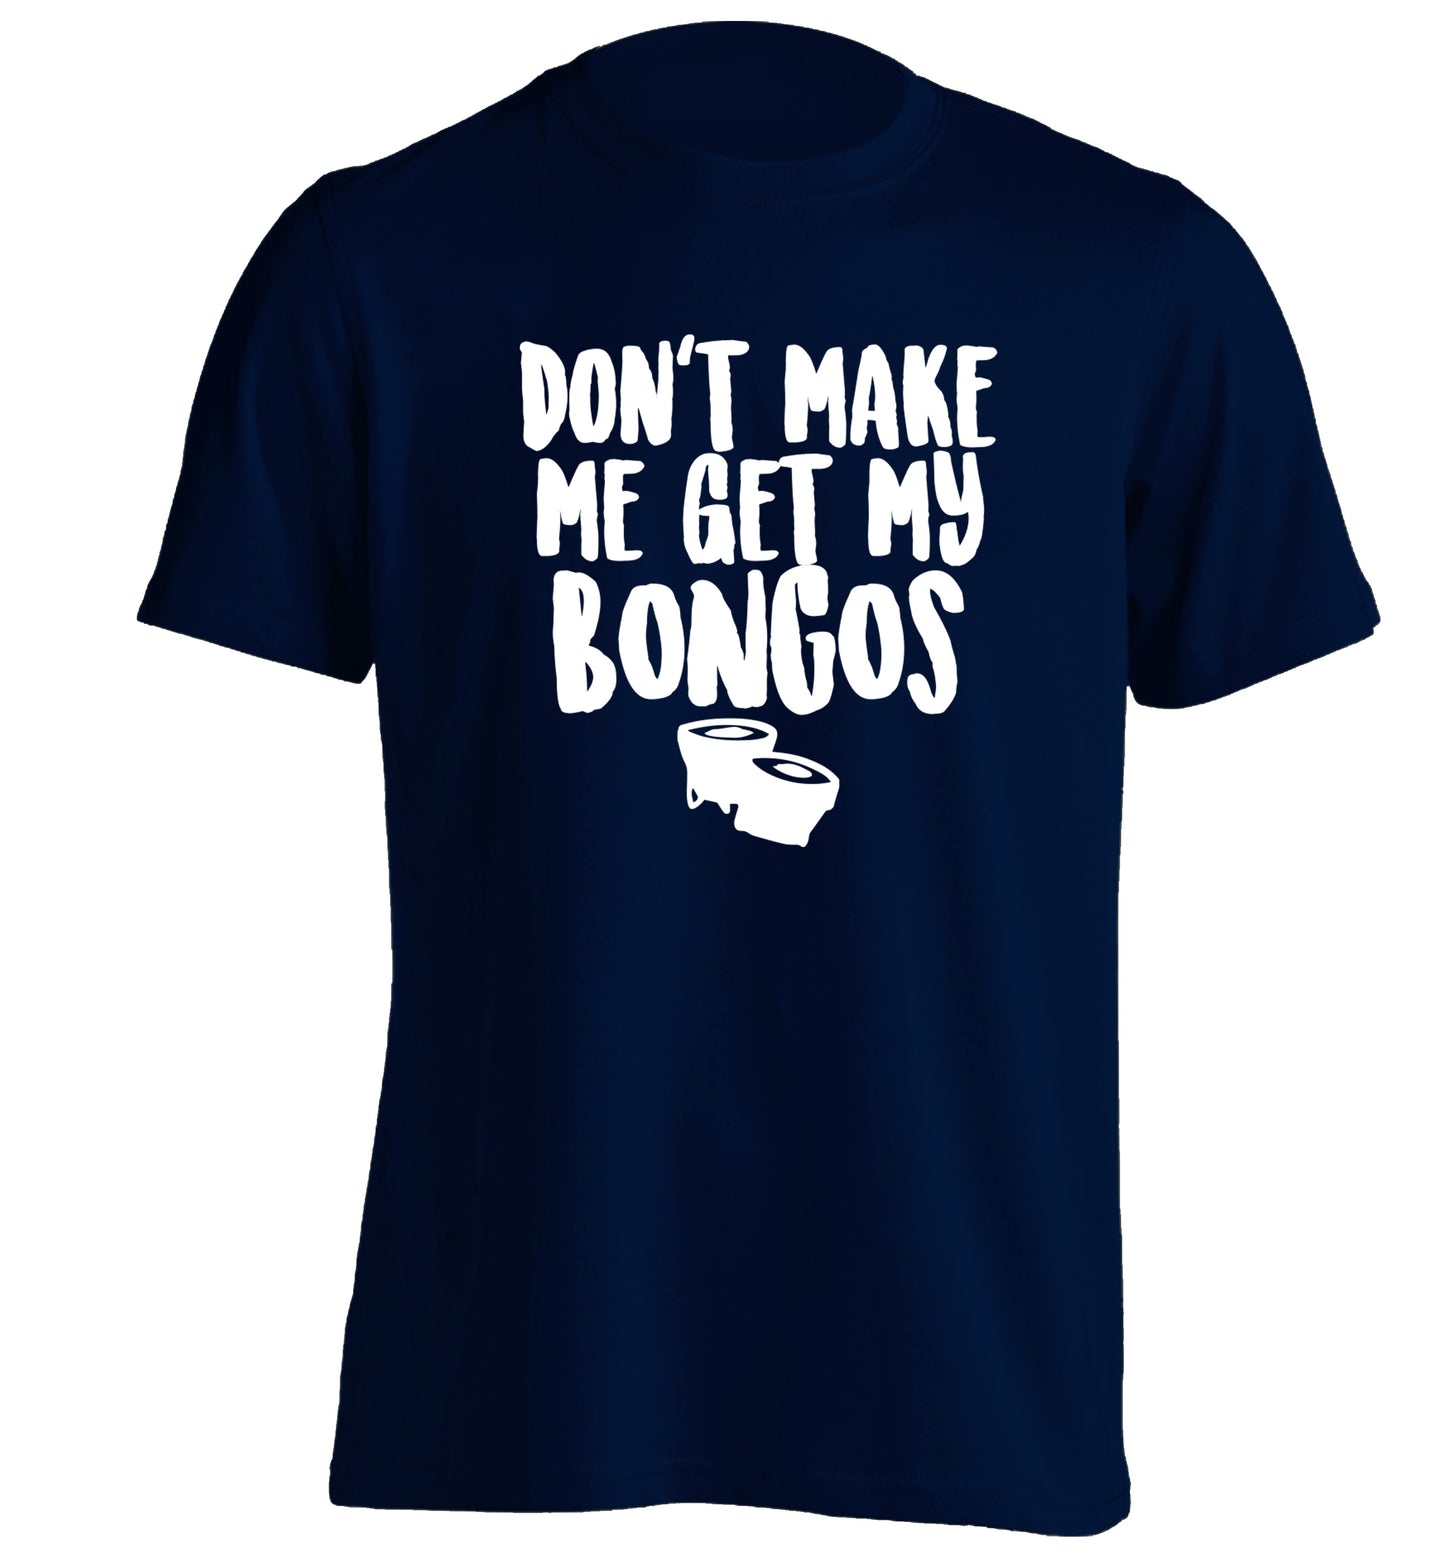 Don't make me get my bongos adults unisex navy Tshirt 2XL